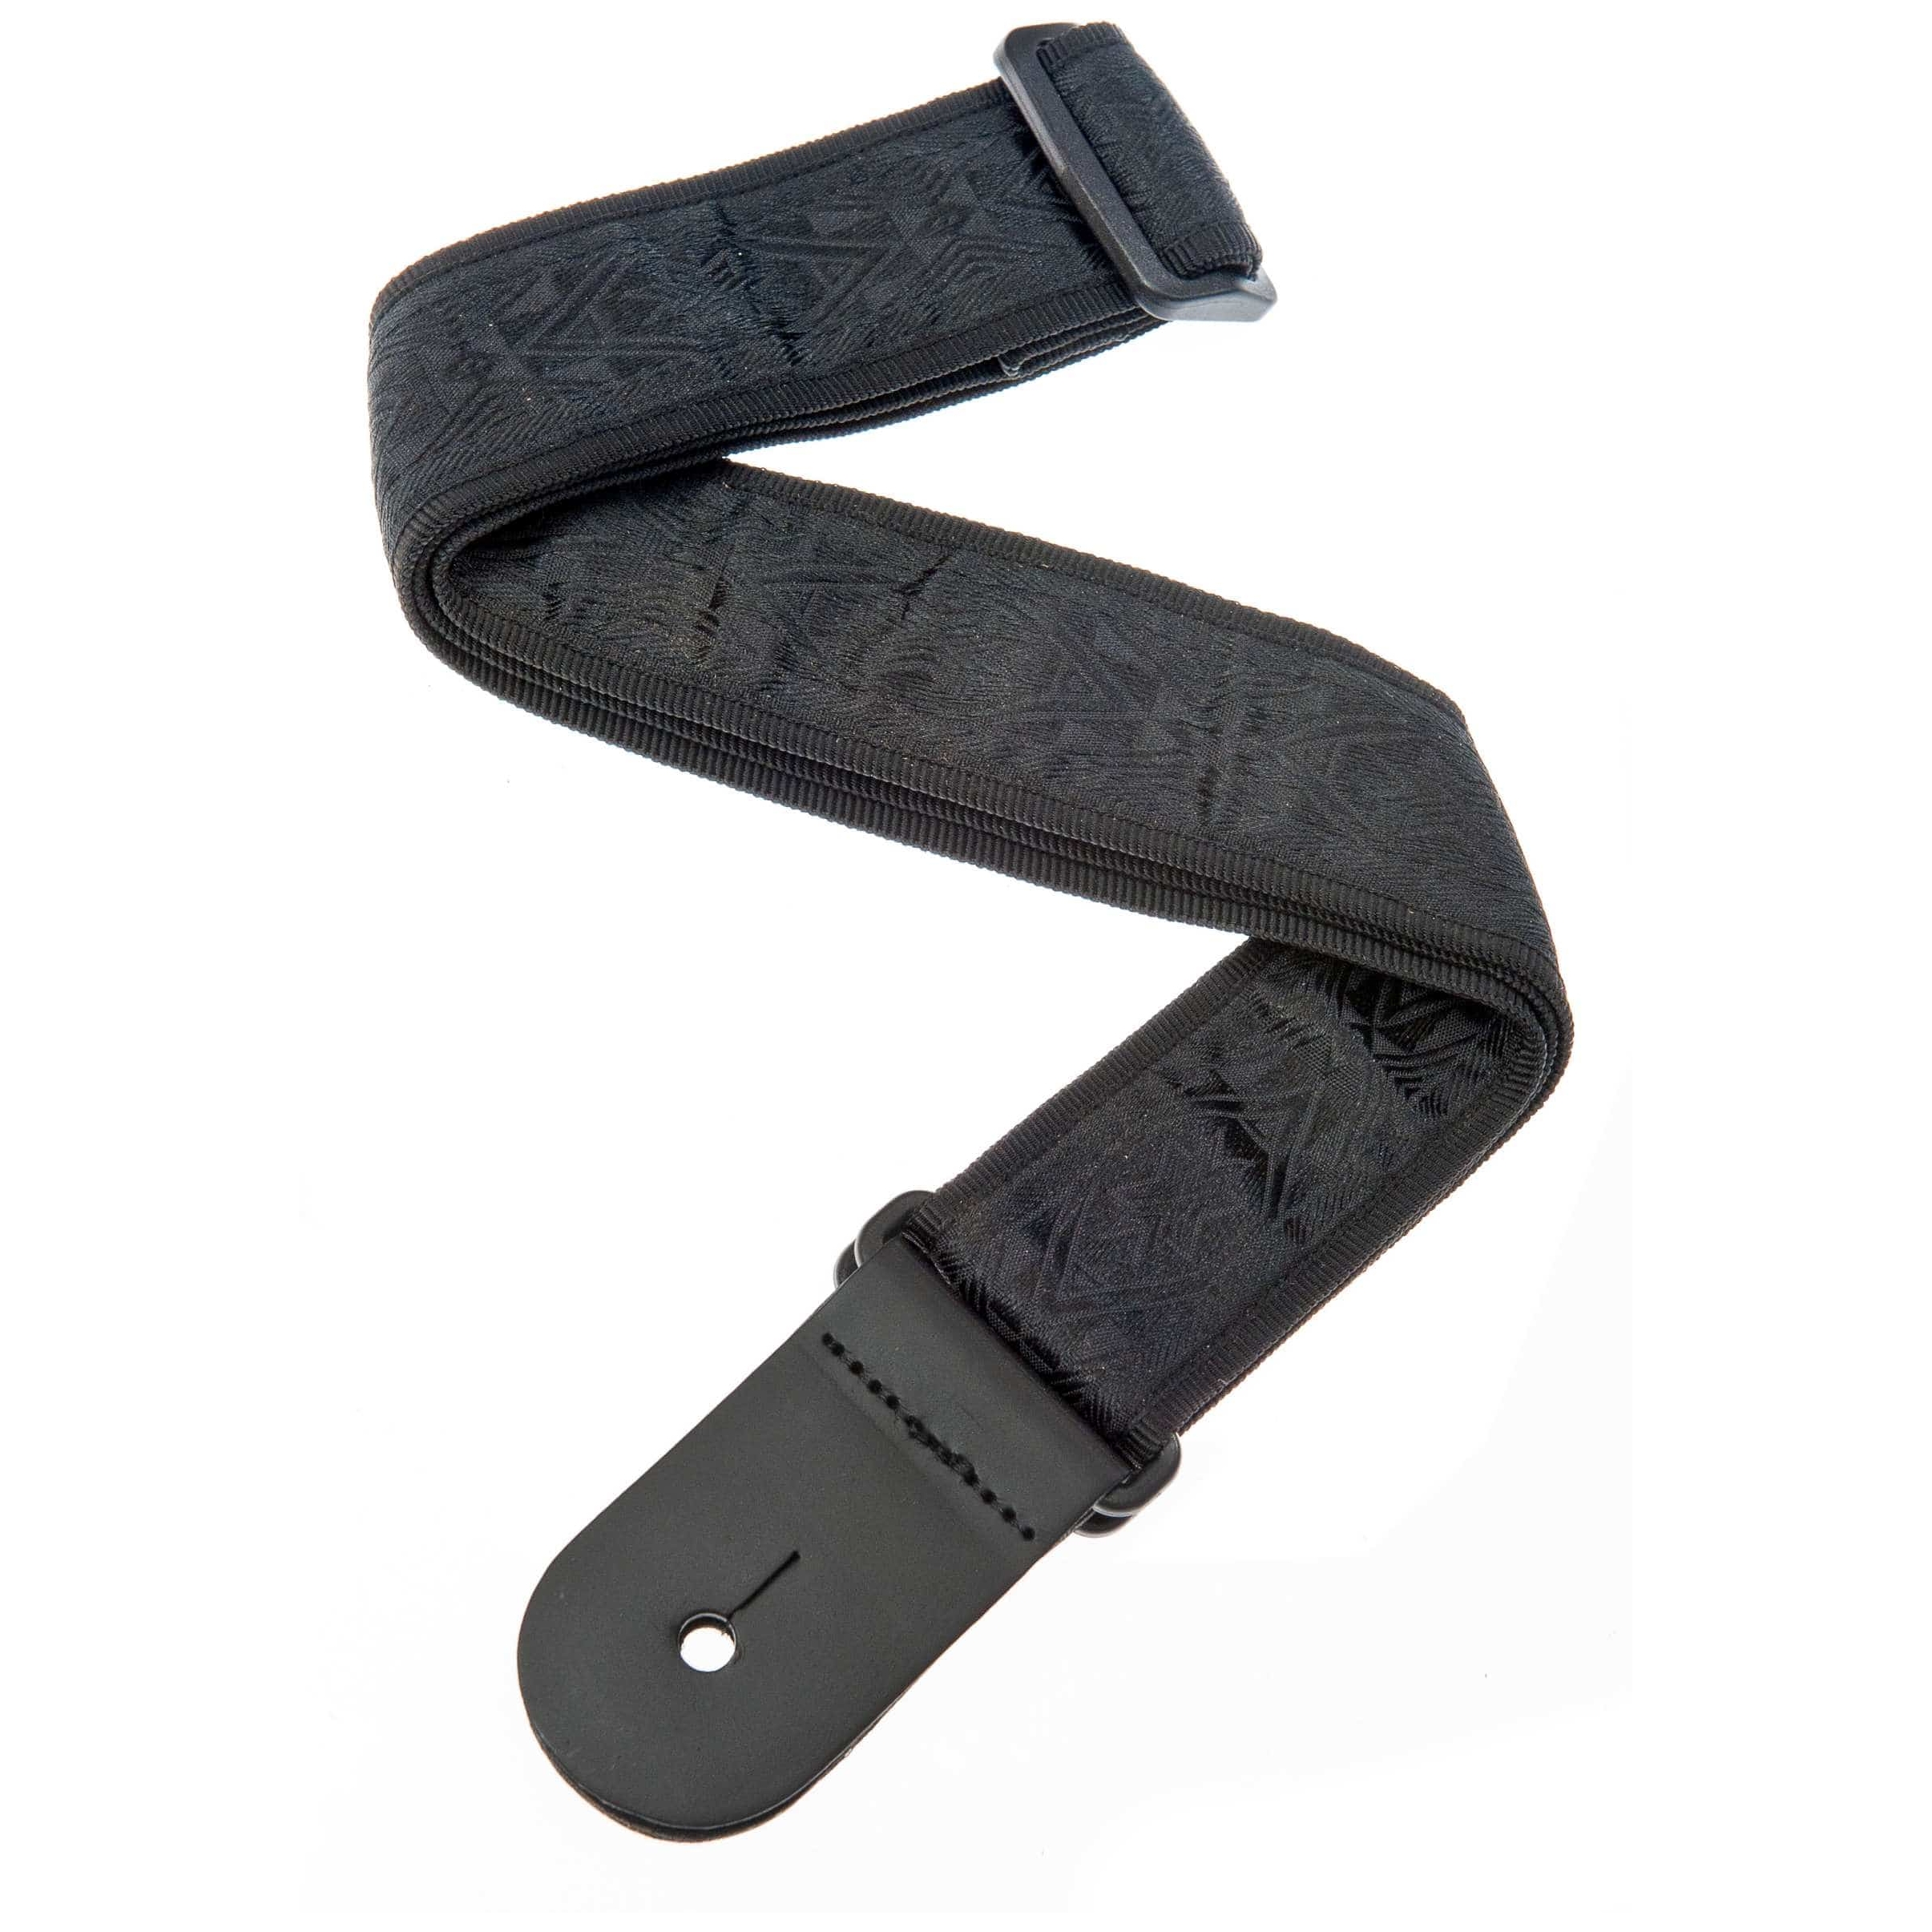 D'Addario guitar strap - nylon fabric, black satin